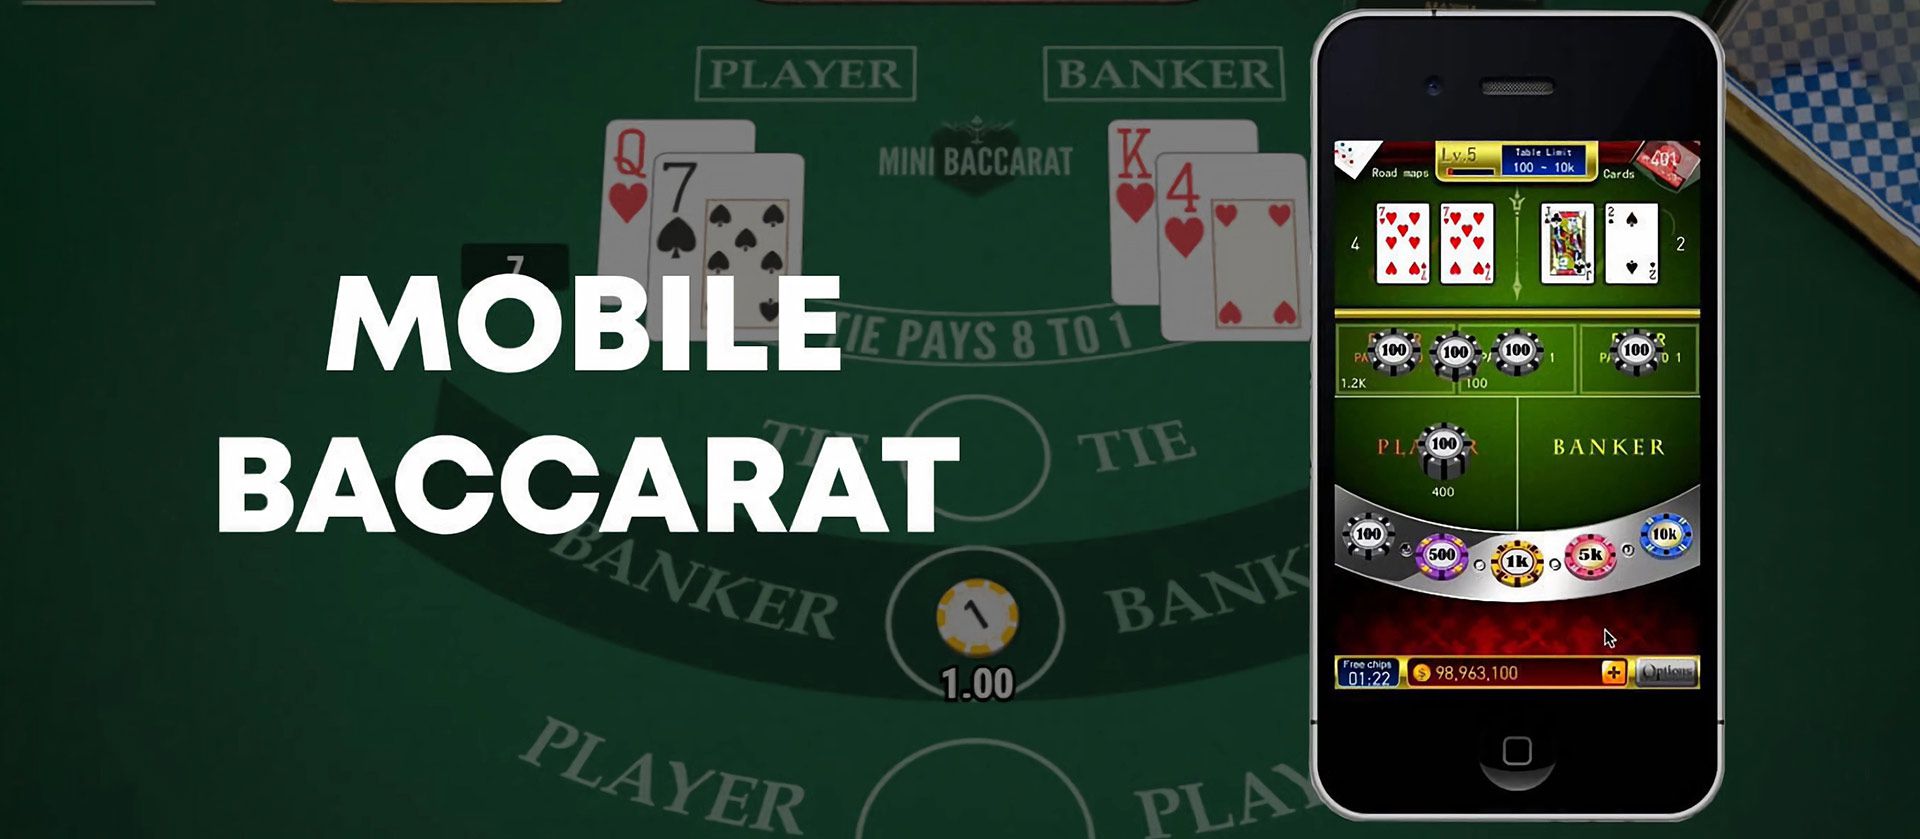 Mobile baccarat format in online casinos in Canada.